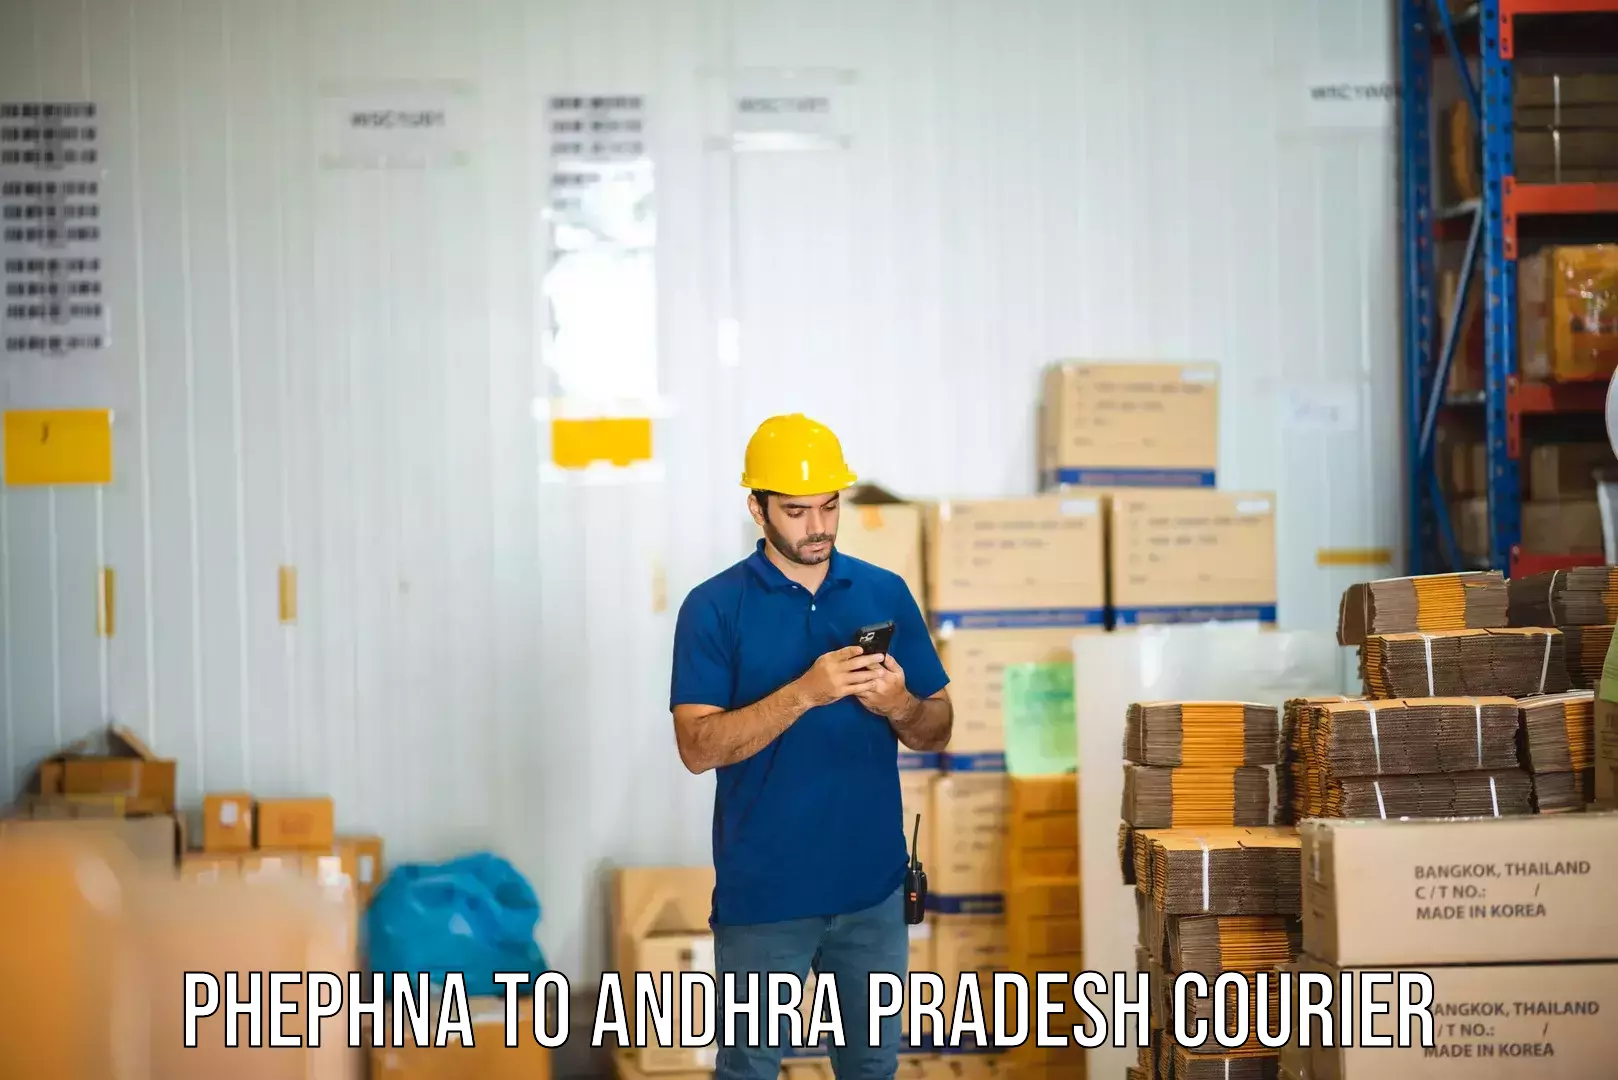 International courier networks Phephna to Andhra Pradesh